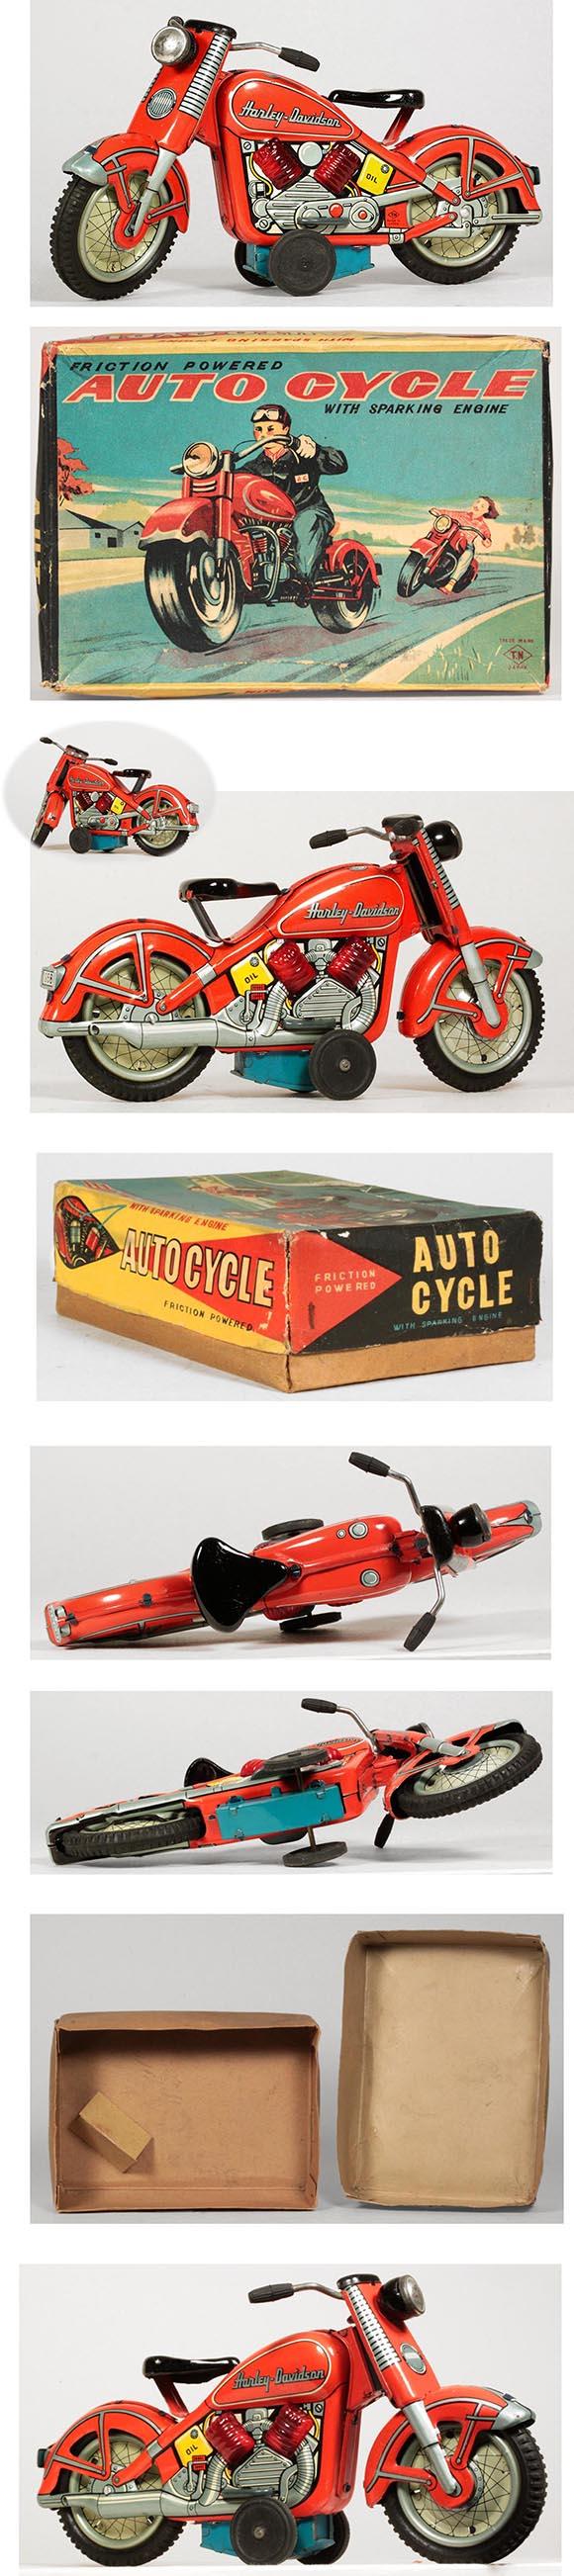 1958 Nomura, Harley-Davidson Motorcycle (Auto Cycle) in Original Box